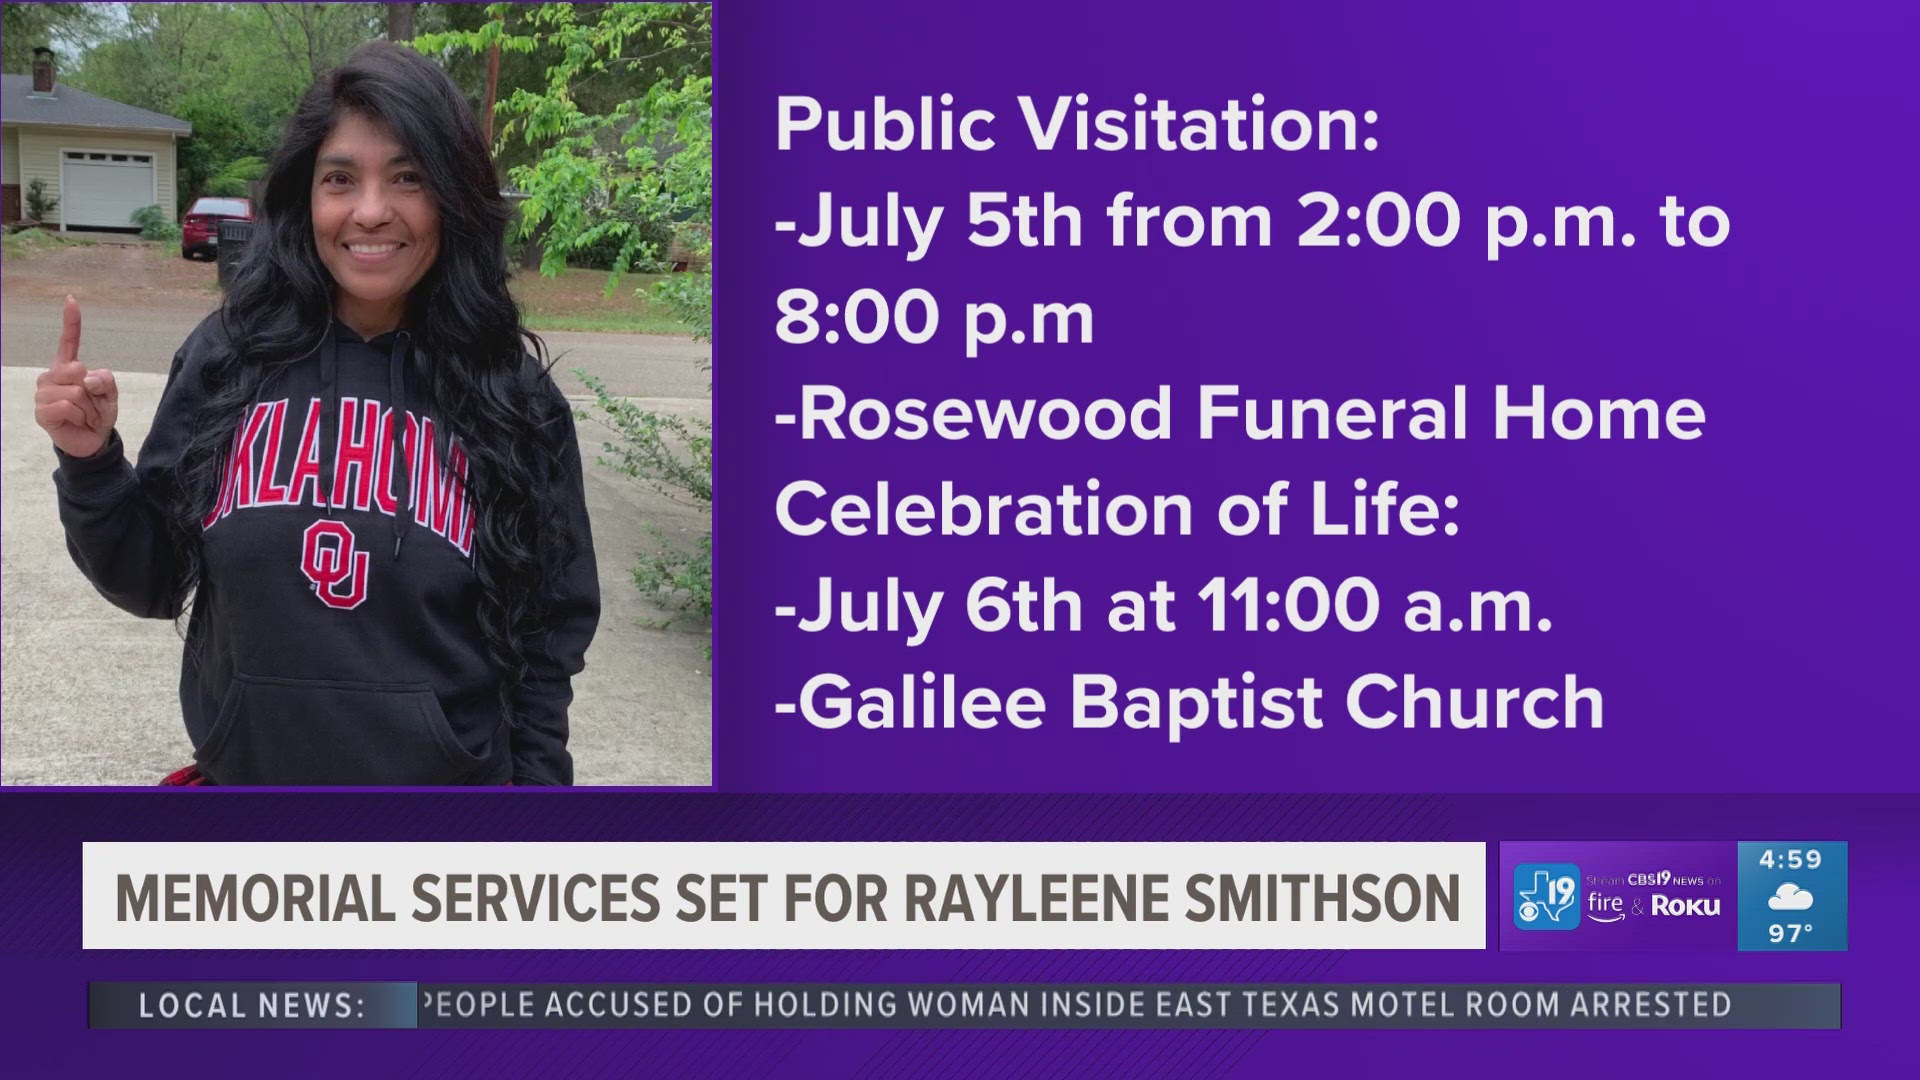 Memorial services set for Rayleene Smithson